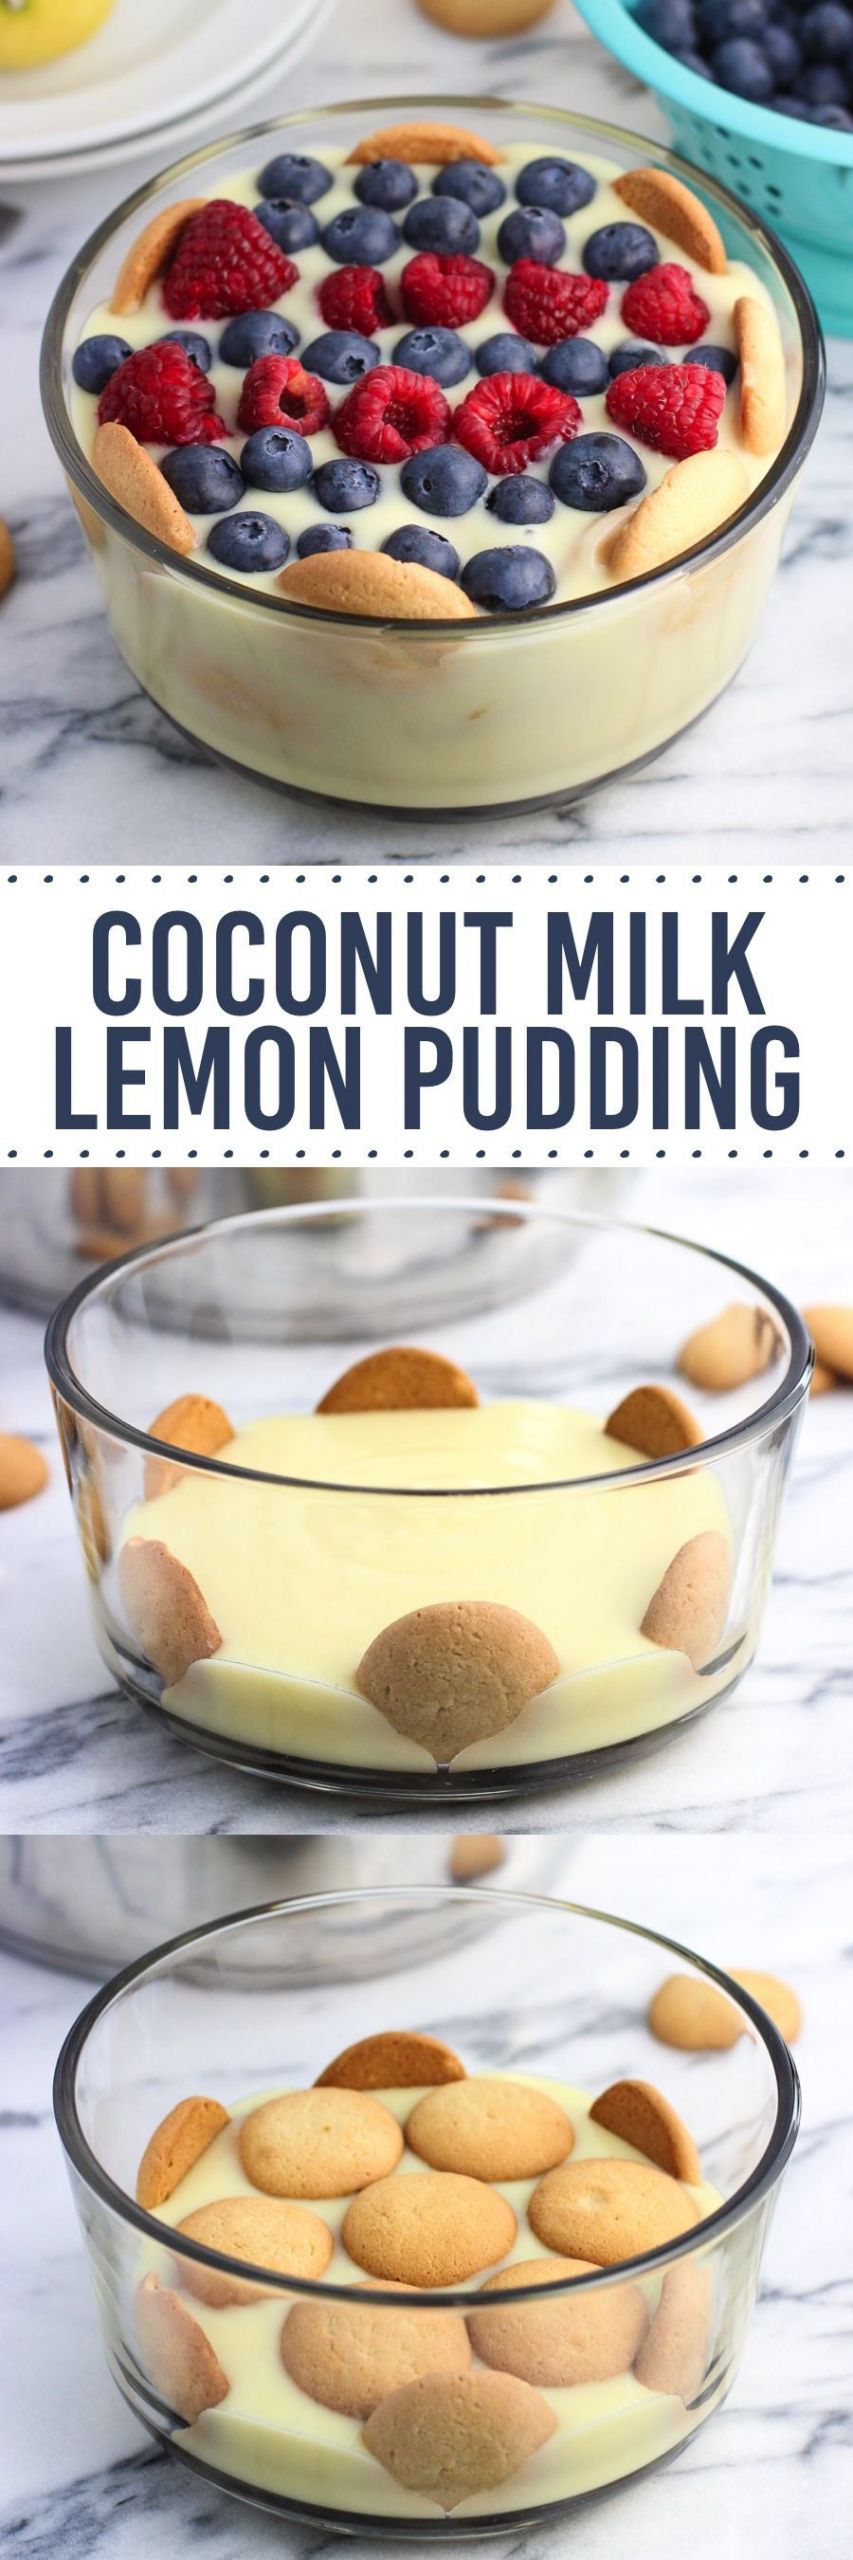 Coconut Milk Dessert Recipes
 This coconut milk lemon pudding is creamy tart and just